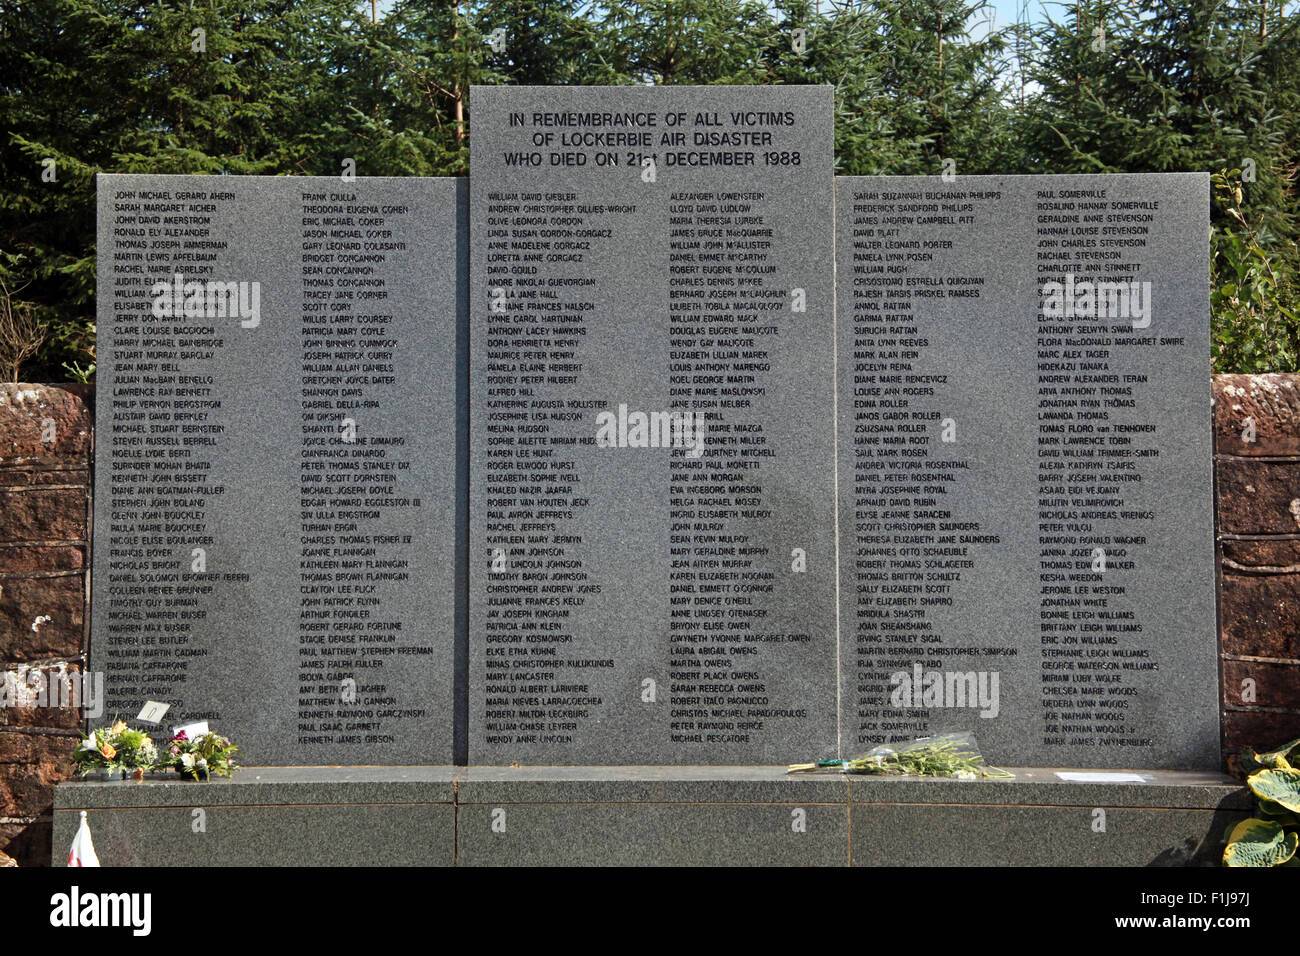 Lockerbie PanAm103 Victims Memorial,Scotland - Multiple names listed 21st December 1988 Stock Photo